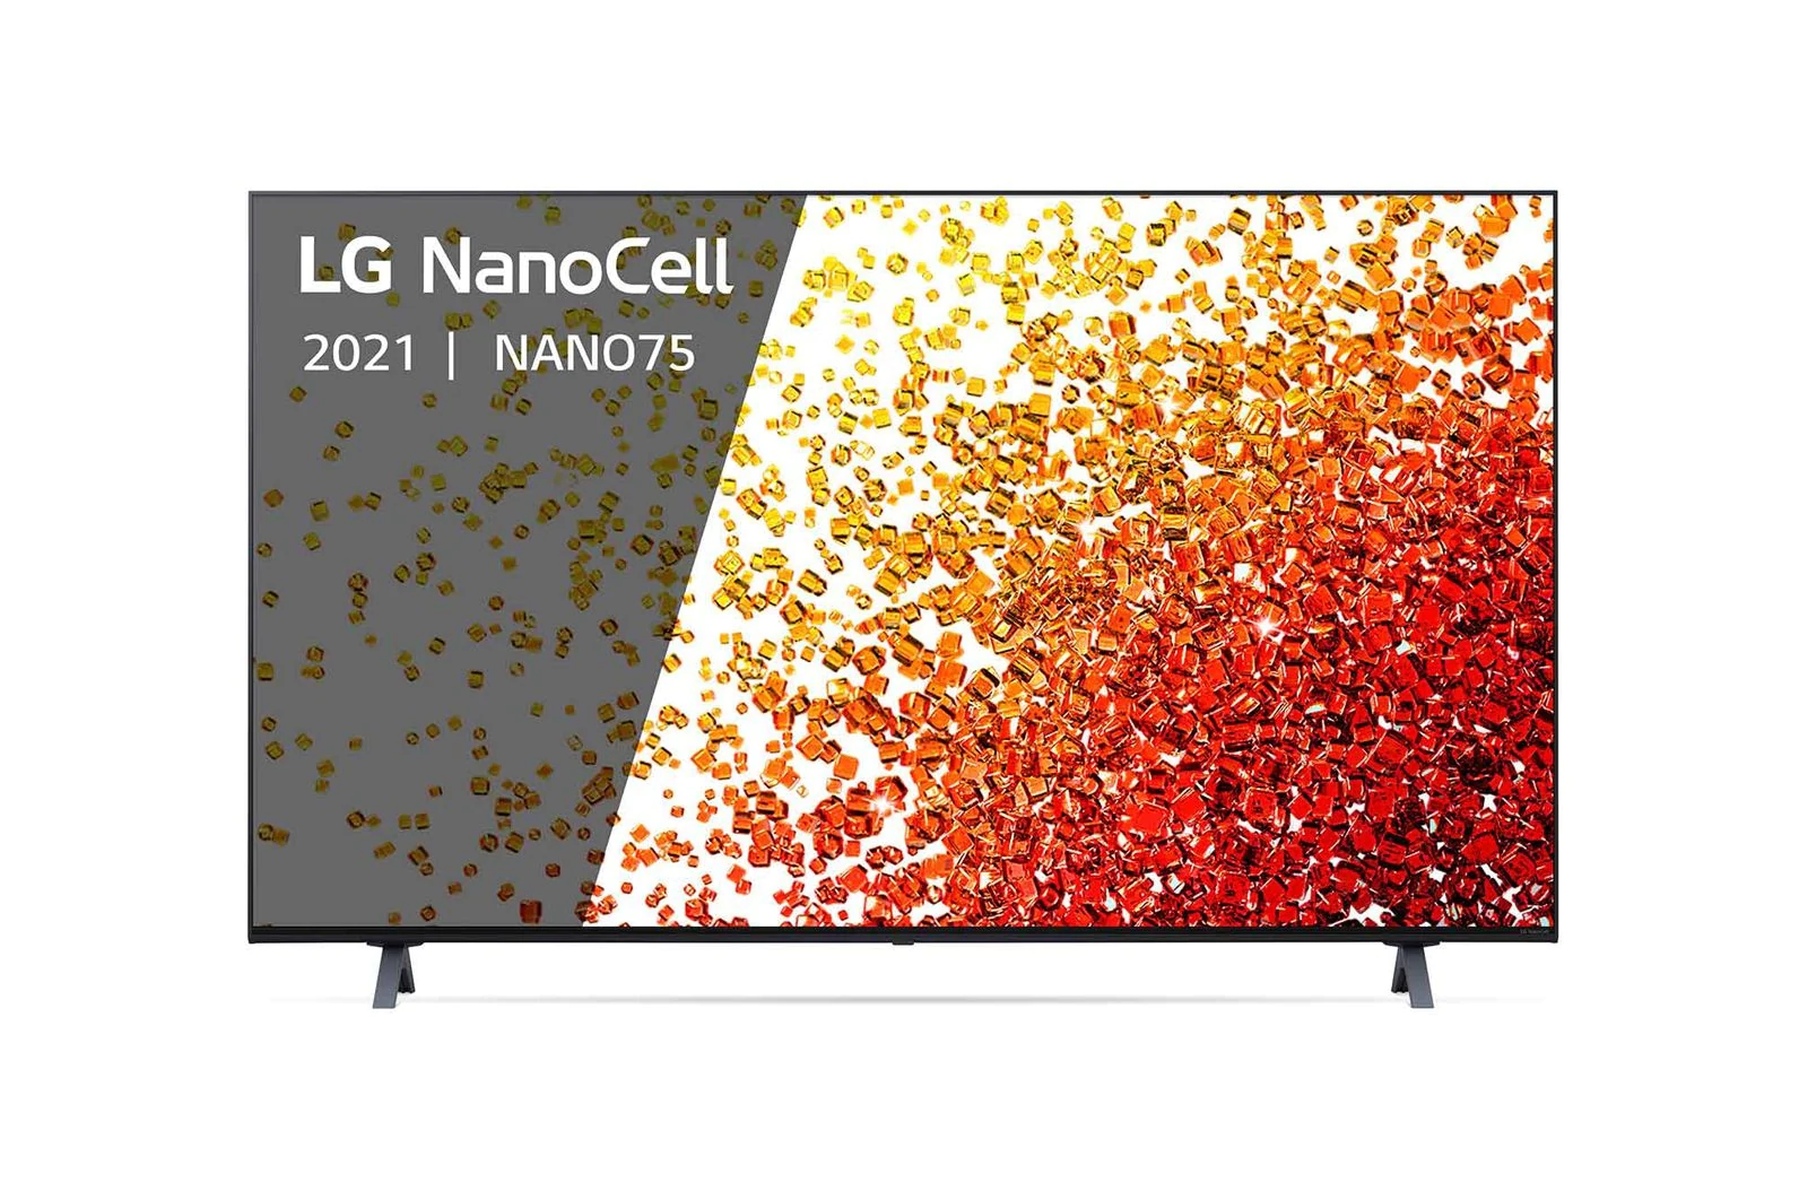 LG NanoCell 50NANO756PA tv 127cm 4K Ultra HD Smart TV Wi-Fi